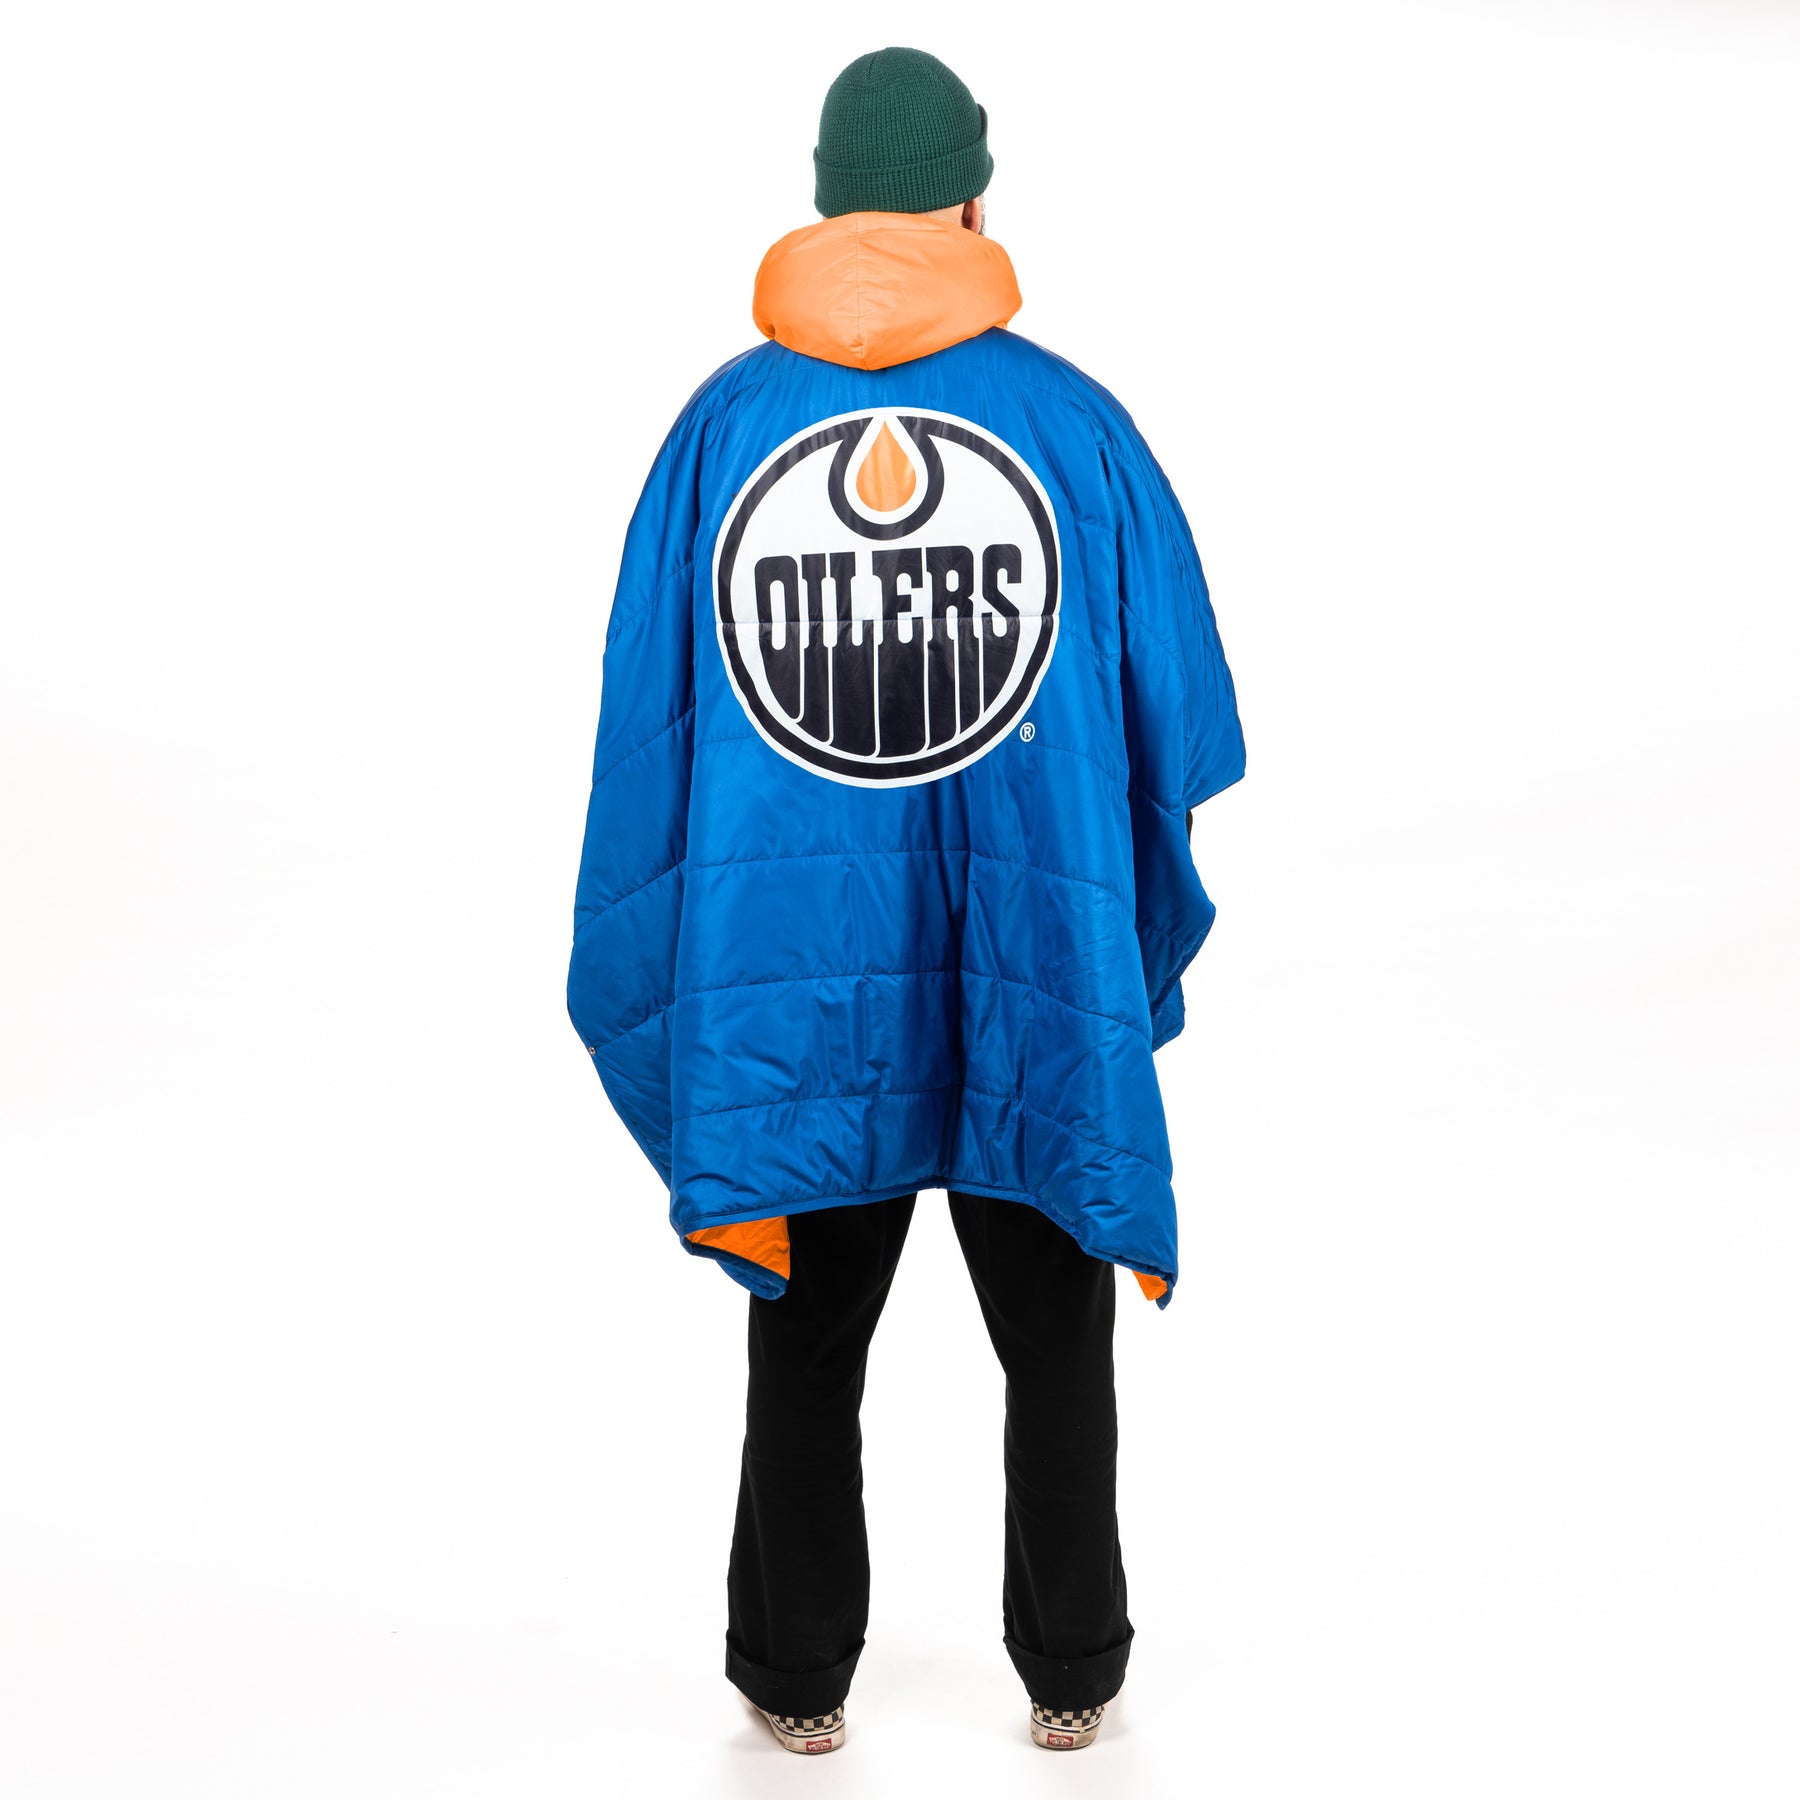 Poler Edmonton Oilers Napsack - Schlafsack (blau / Orange)